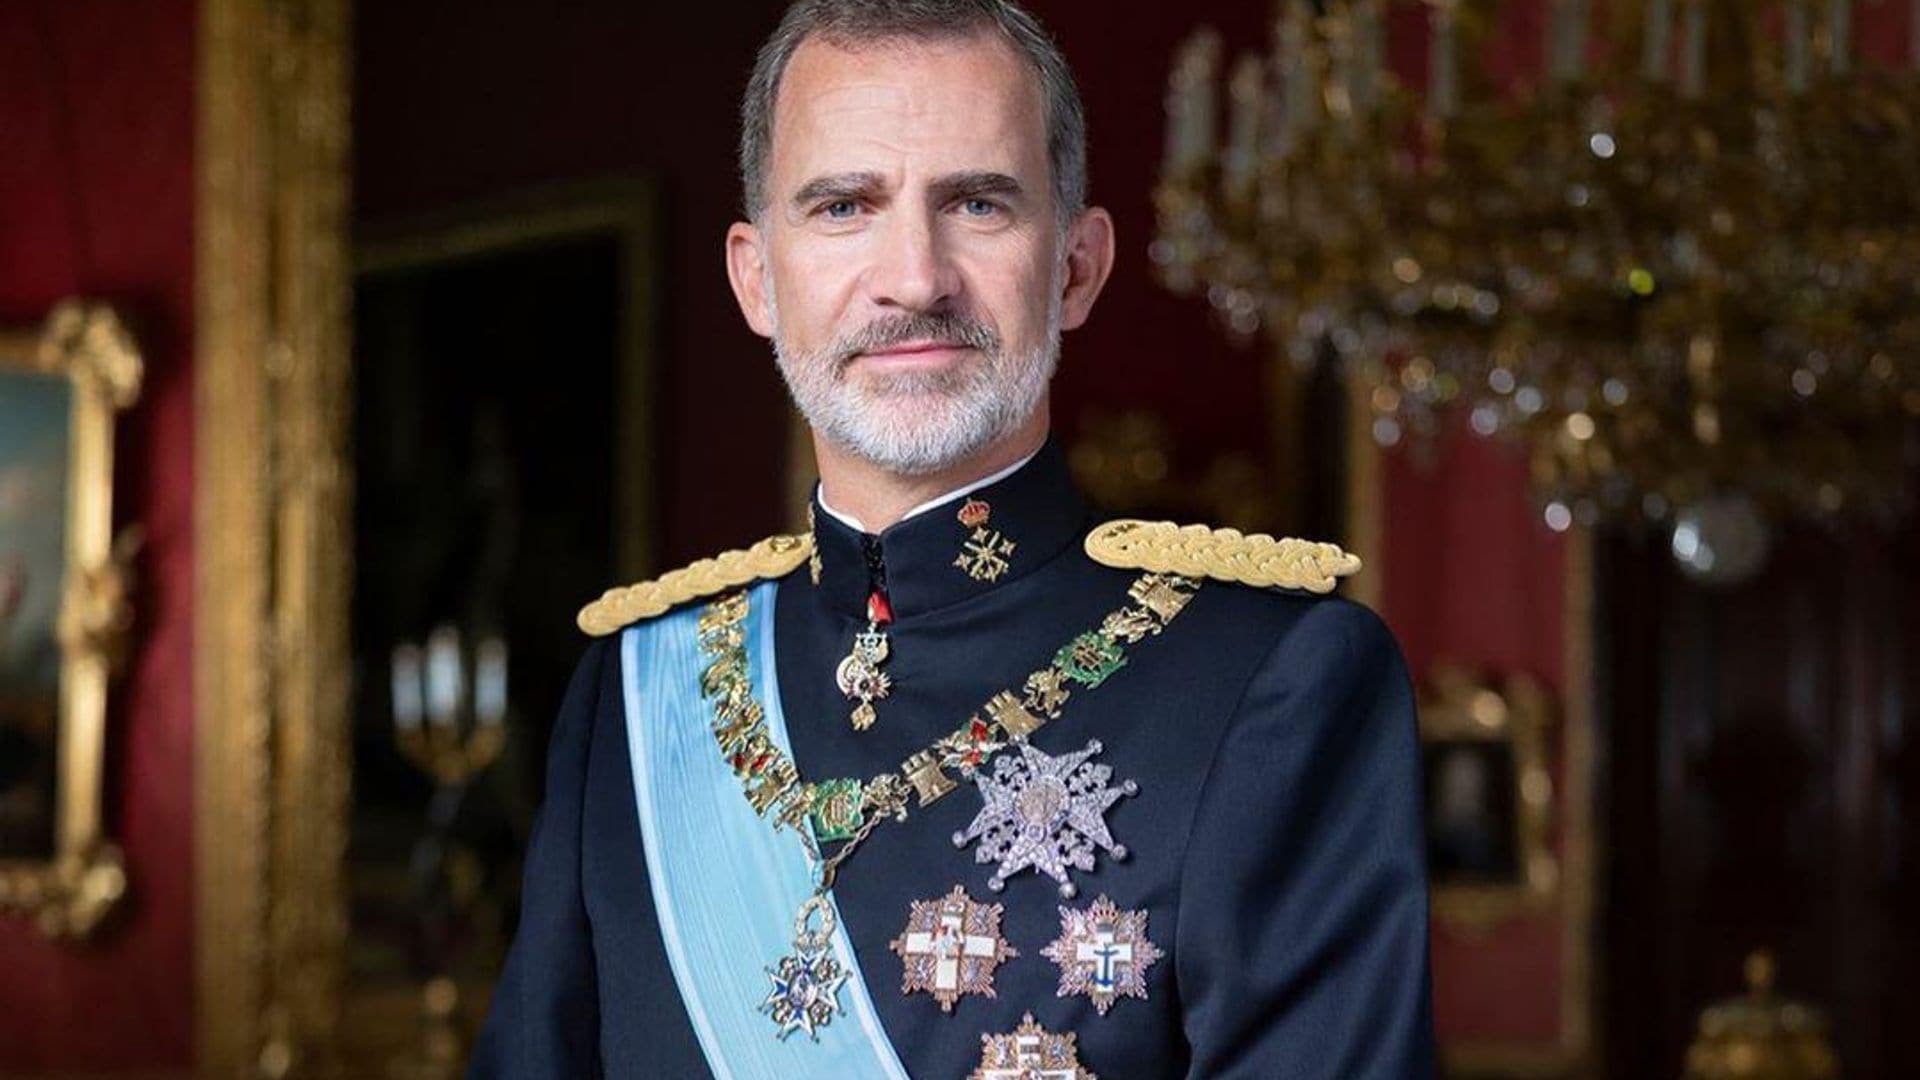 King Felipe of Spain gives up his inheritance of over $58 million